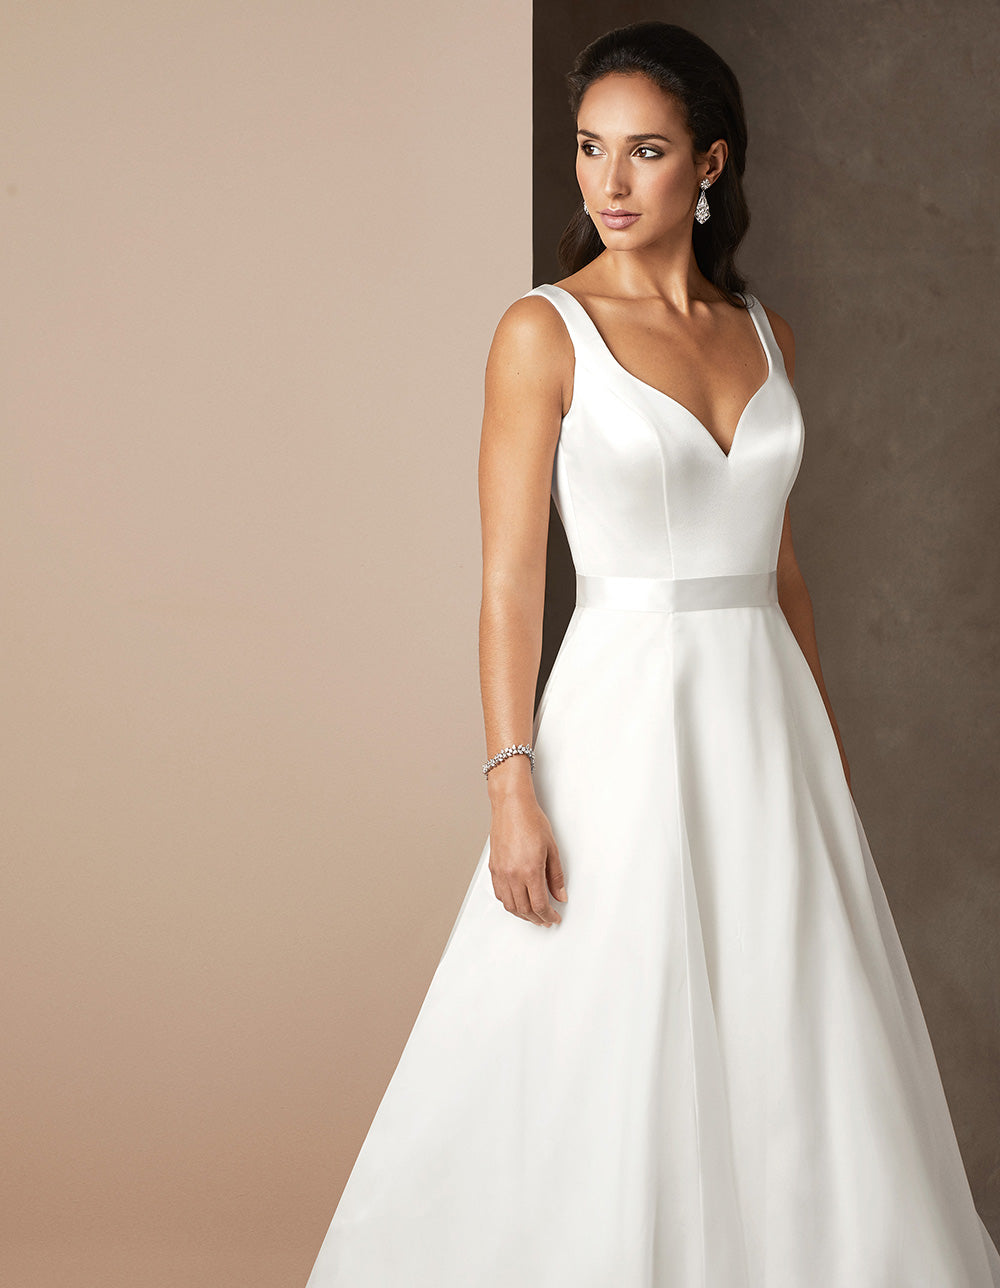 Chelsea luxury wedding gown by Caroline Castigliano